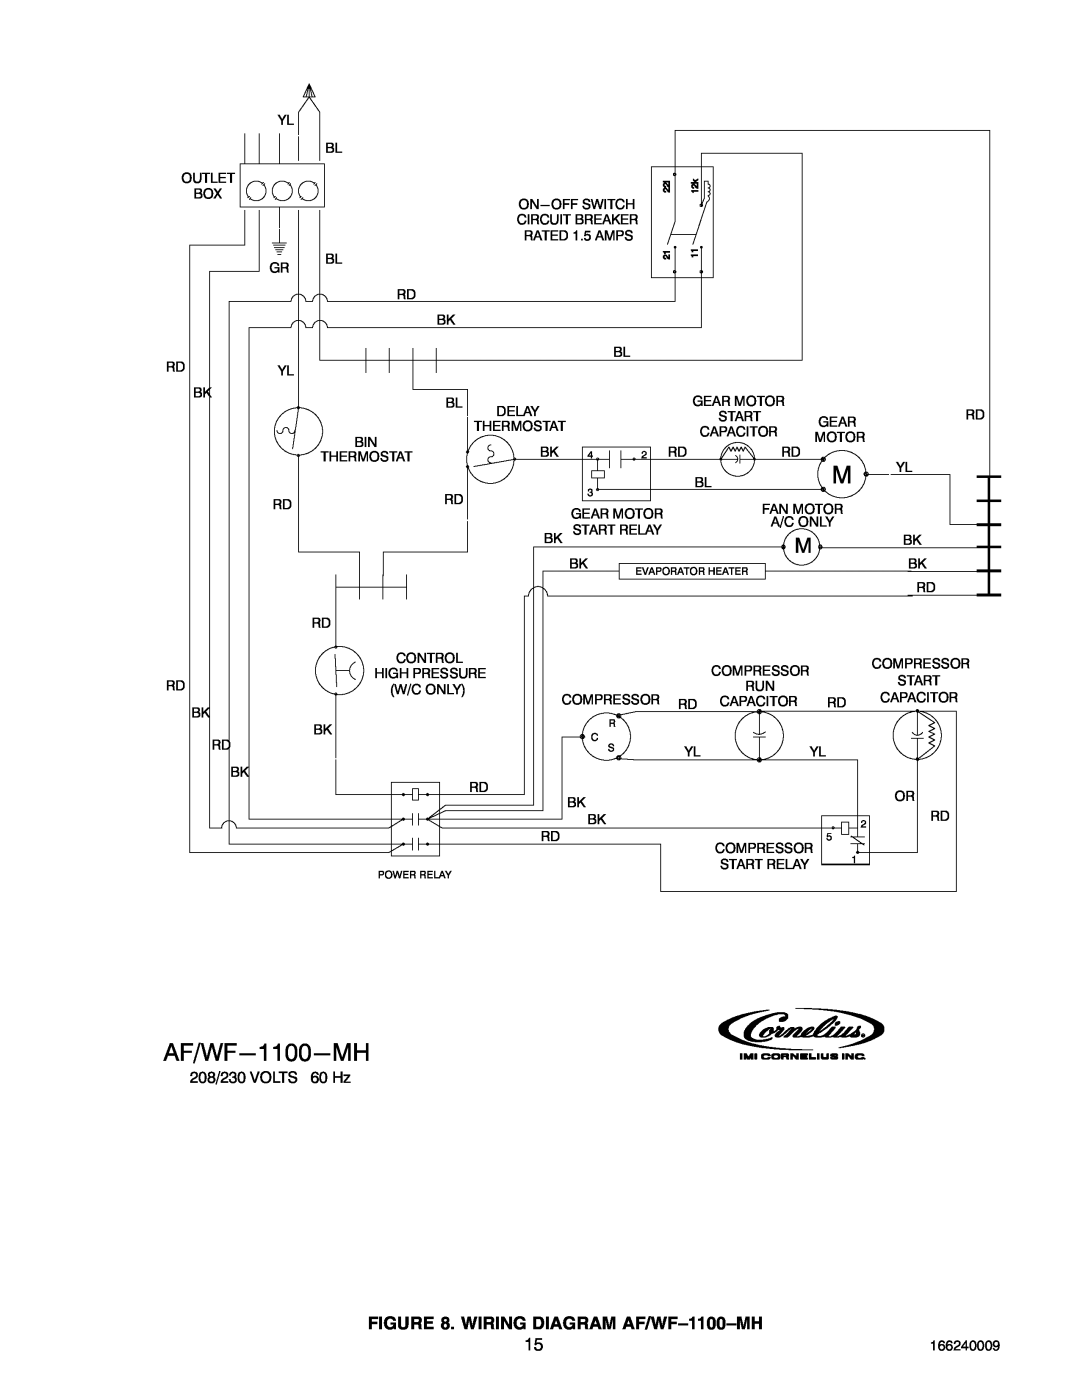 Cornelius 750 (R404A), SERIES 1100 (R22), 2400 (R404A) service manual WIRING DIAGRAM AF/WF-1100-MH, 208/230 VOLTS 60 Hz 